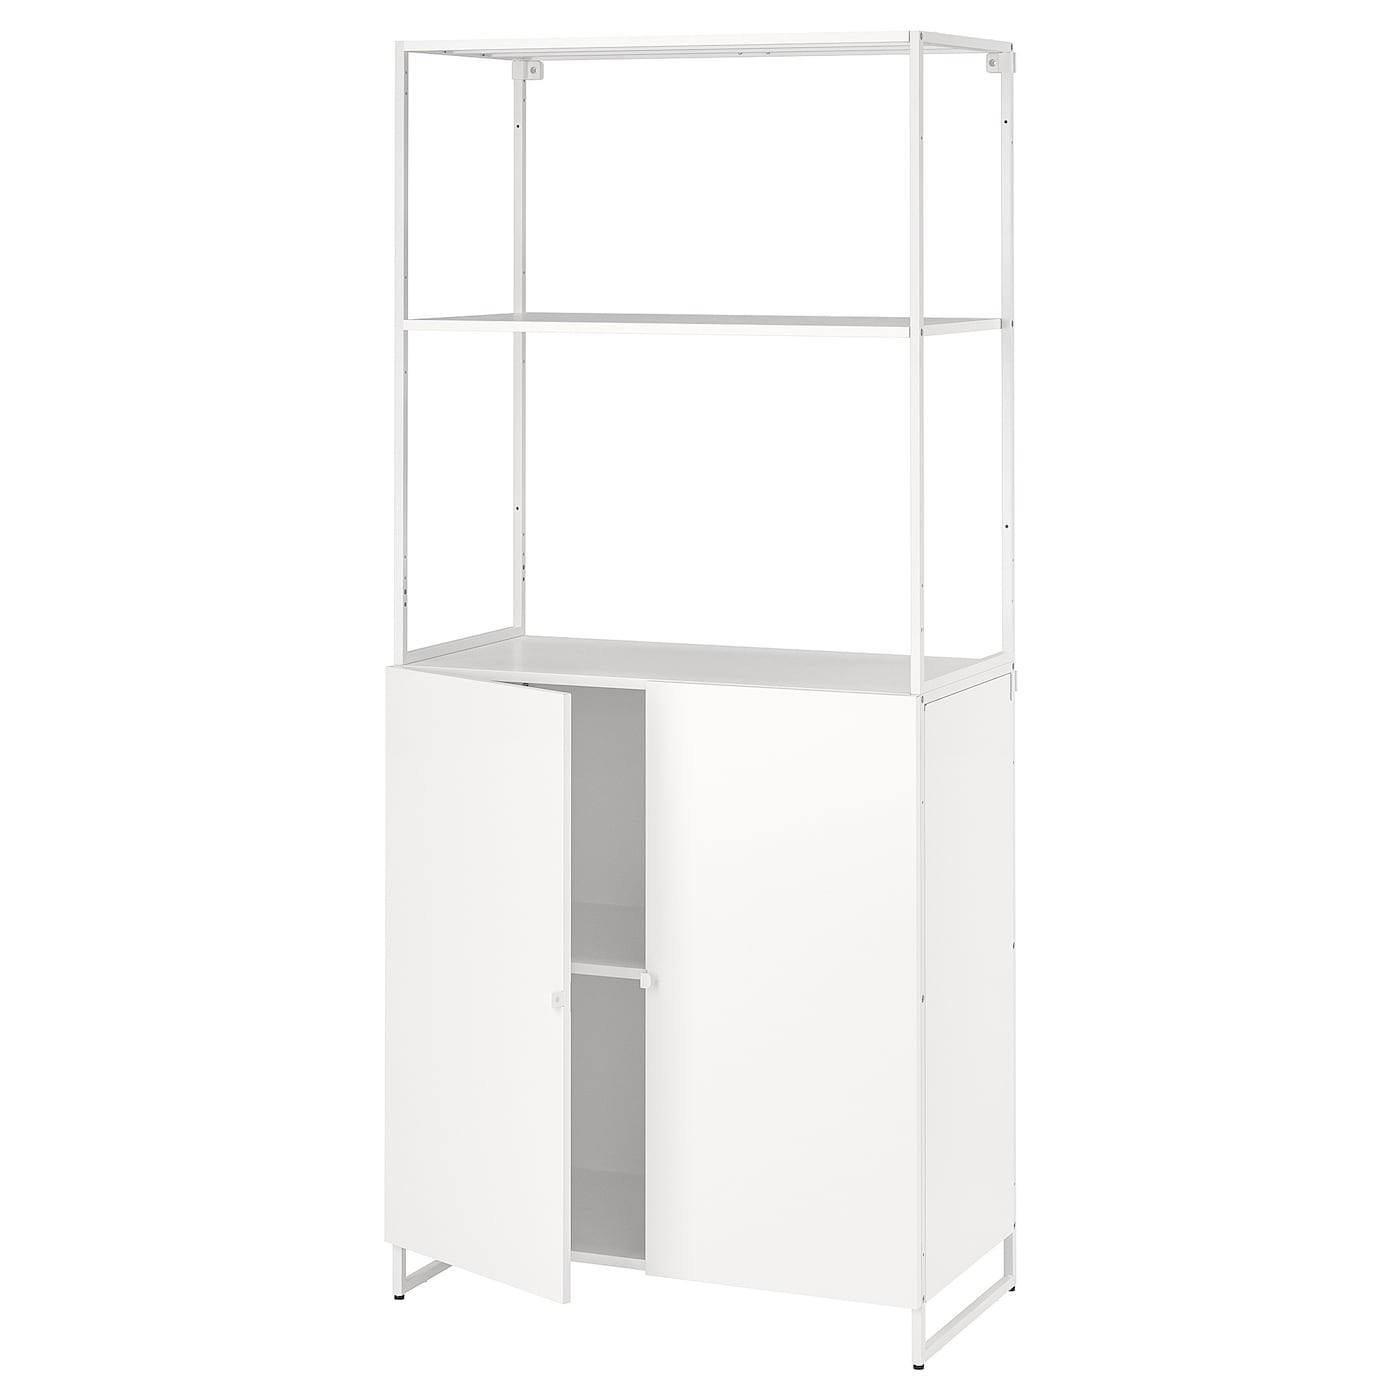 Книжный шкаф - JOSTEIN IKEA/ ЙОСТЕЙН ИКЕА,  180х81 см, белый